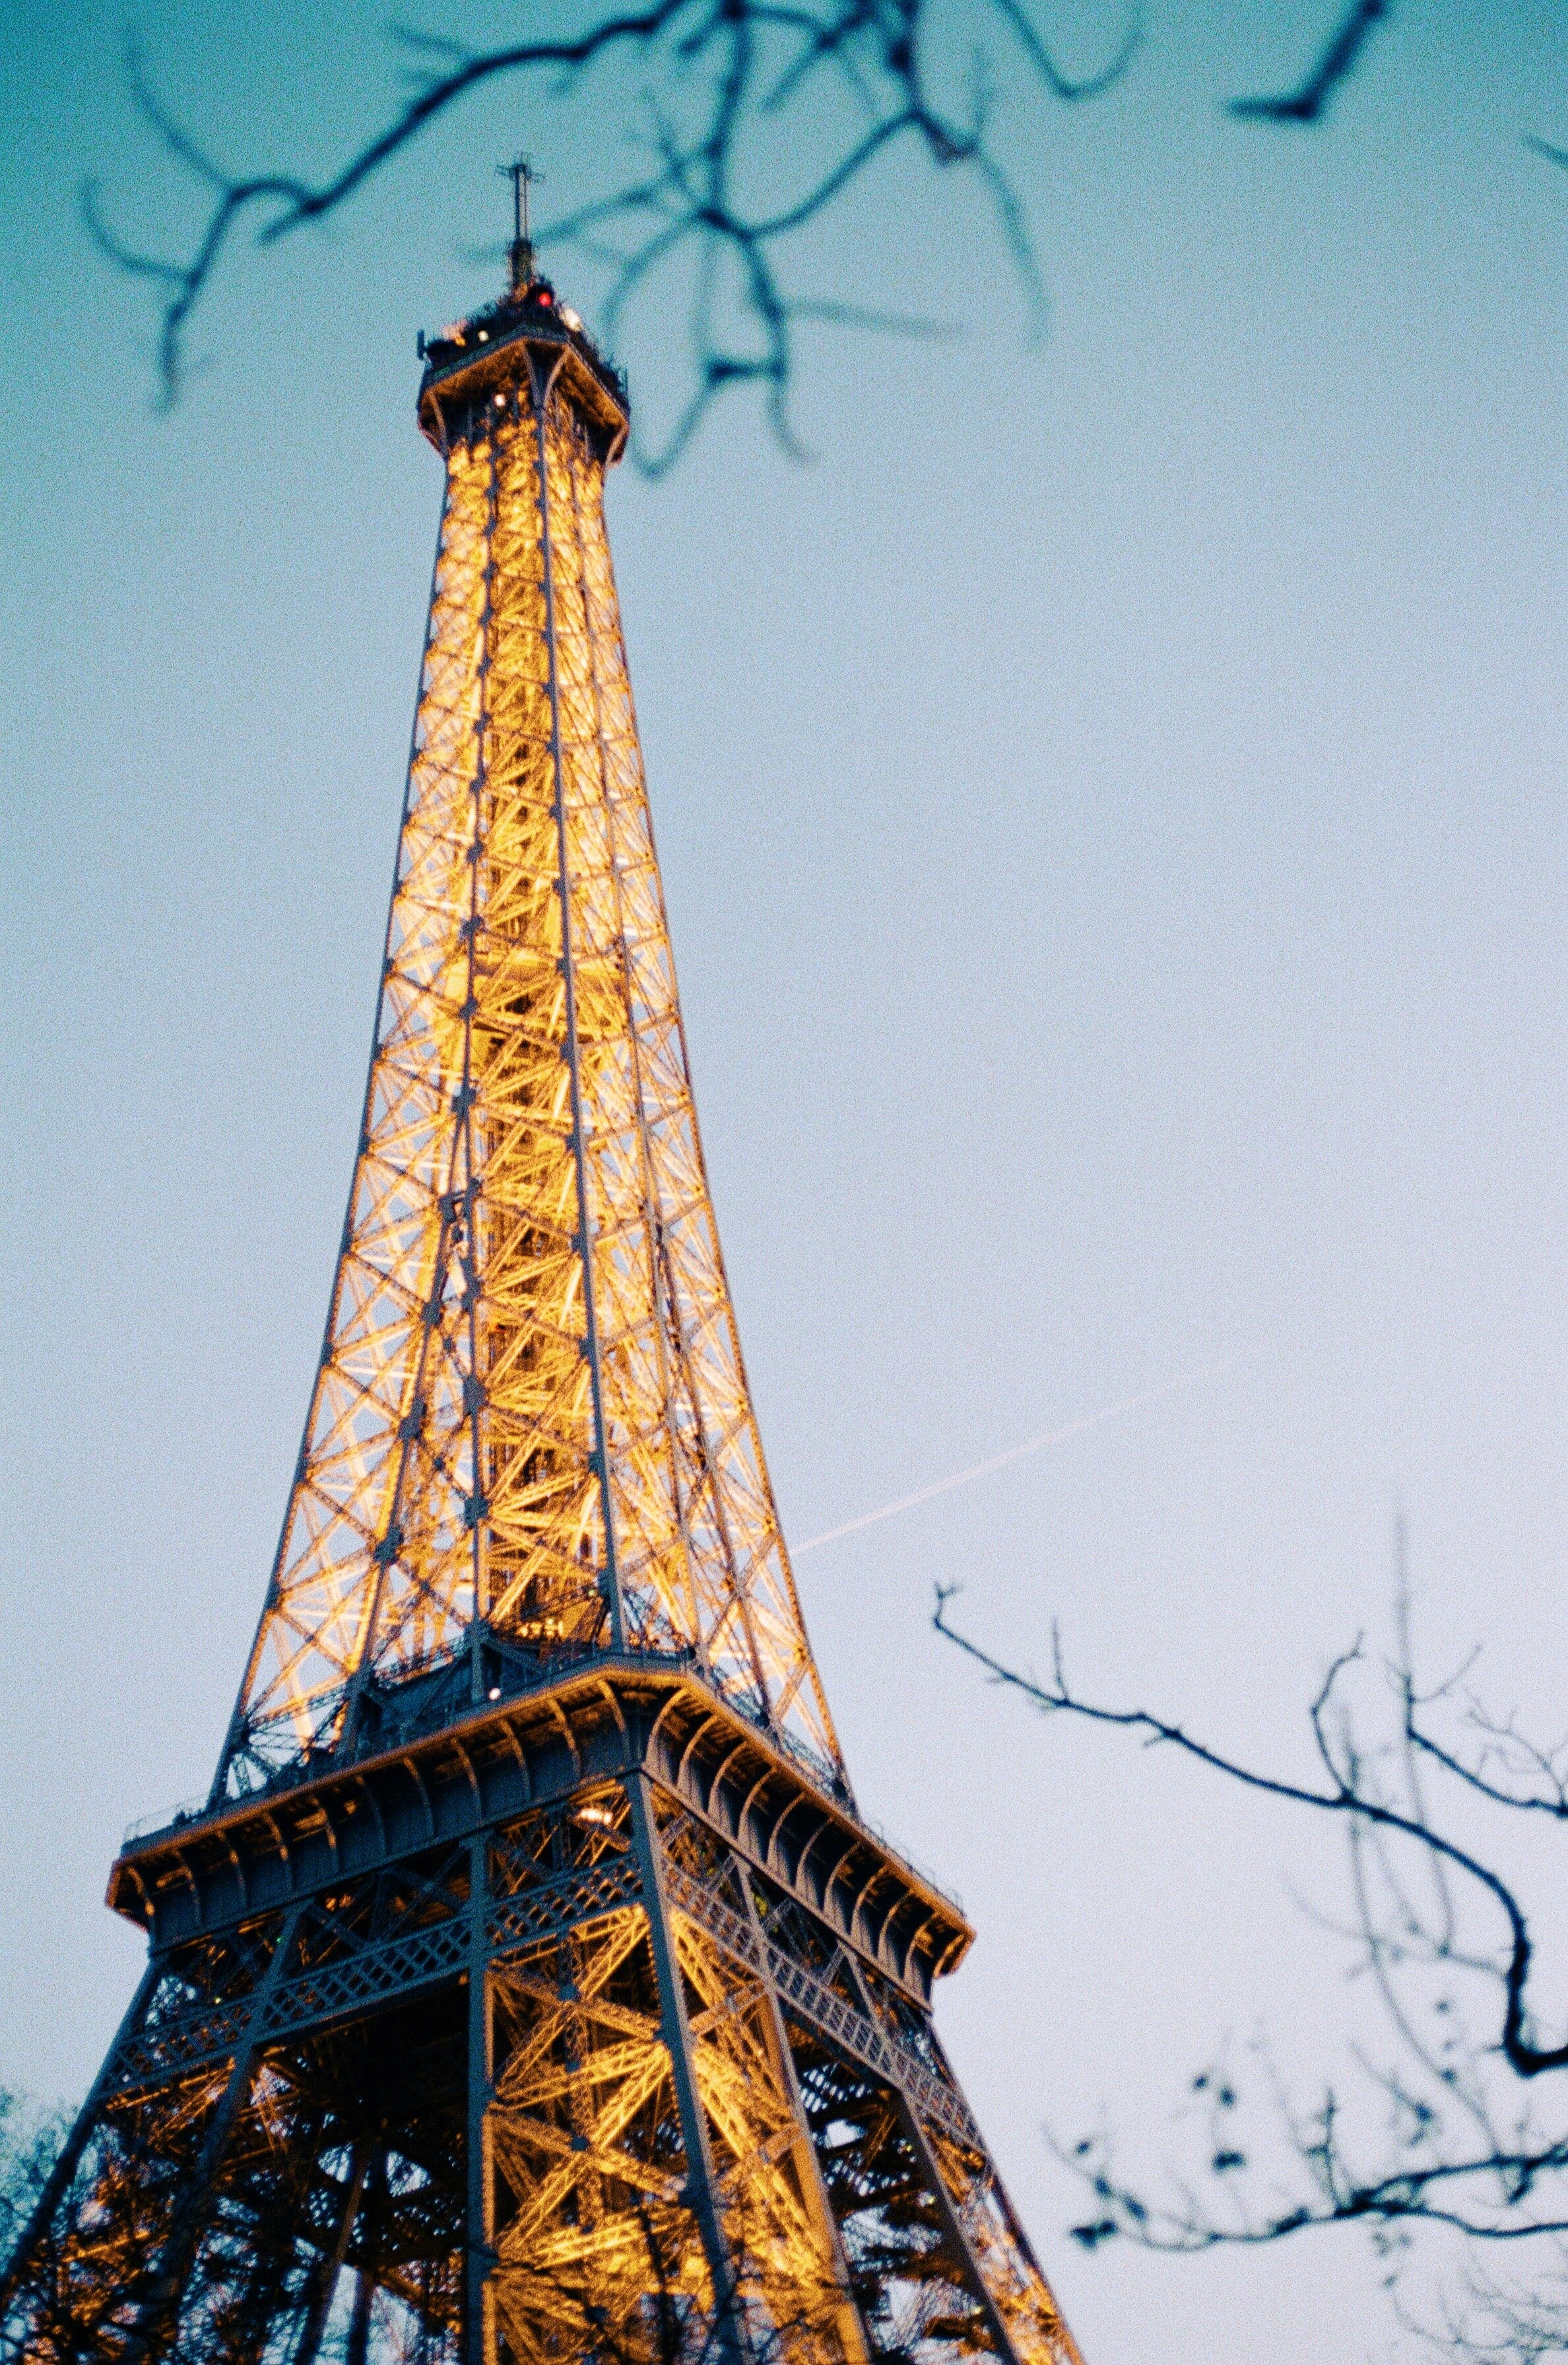 La Tour Eiffel 